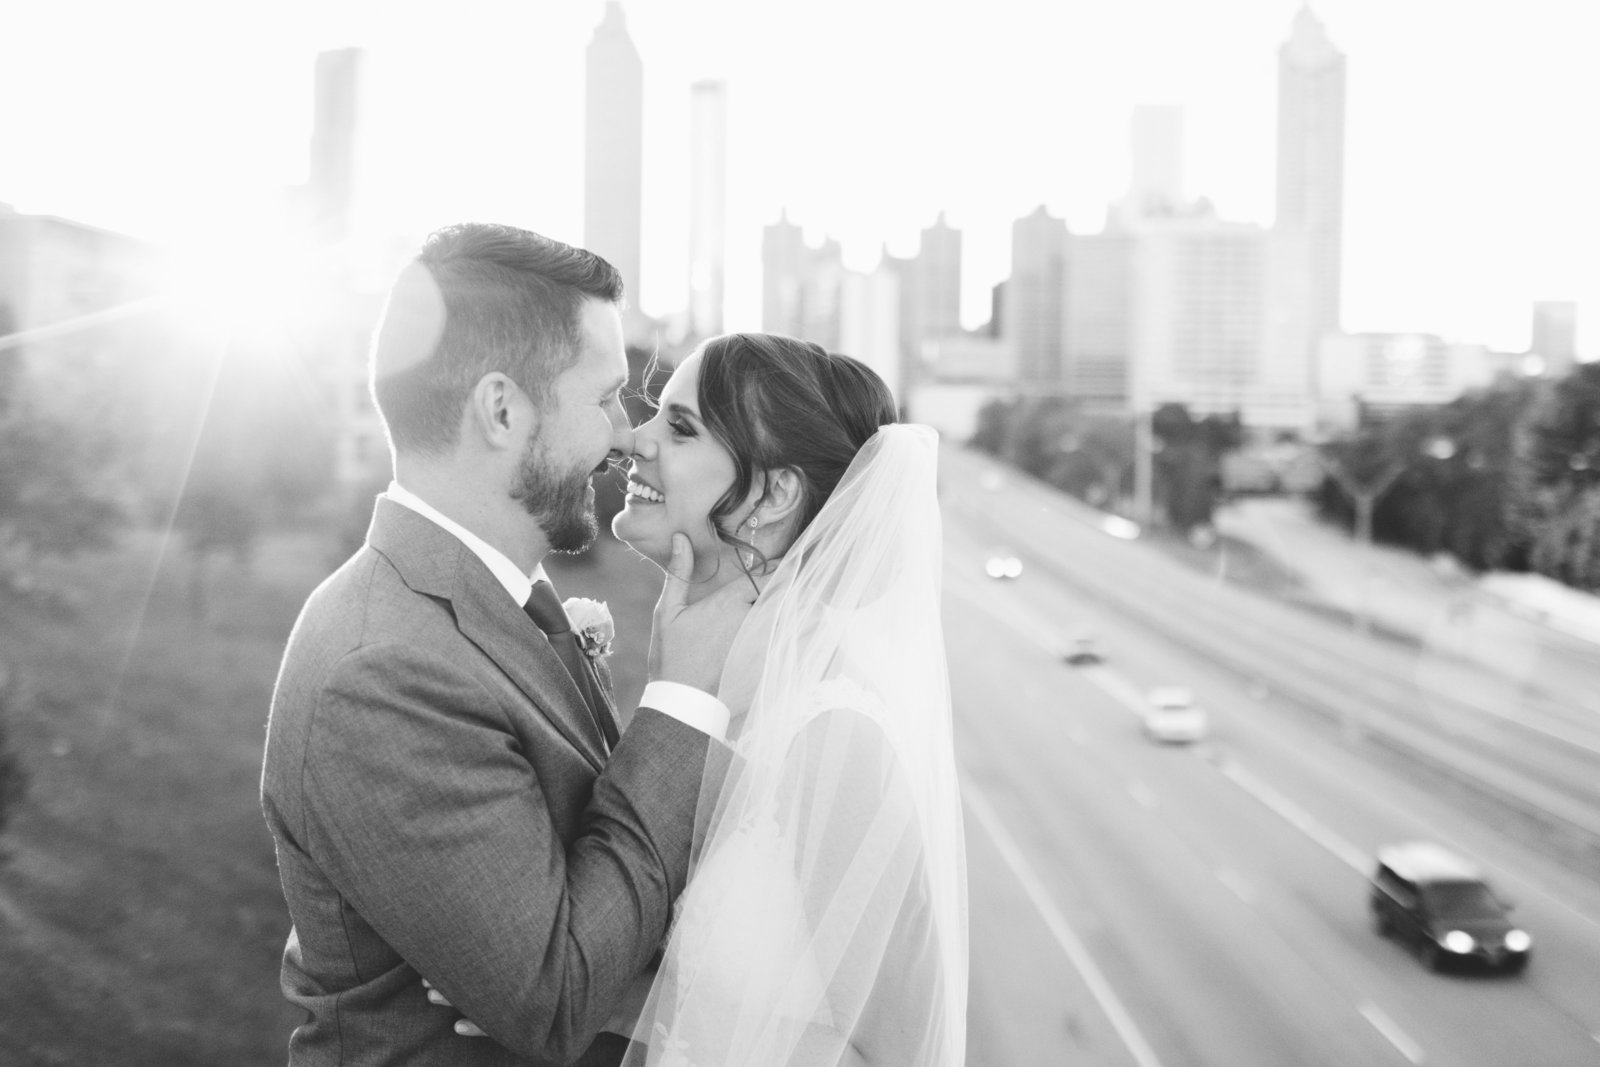 Genuine Wedding Photography for Joyful Couples